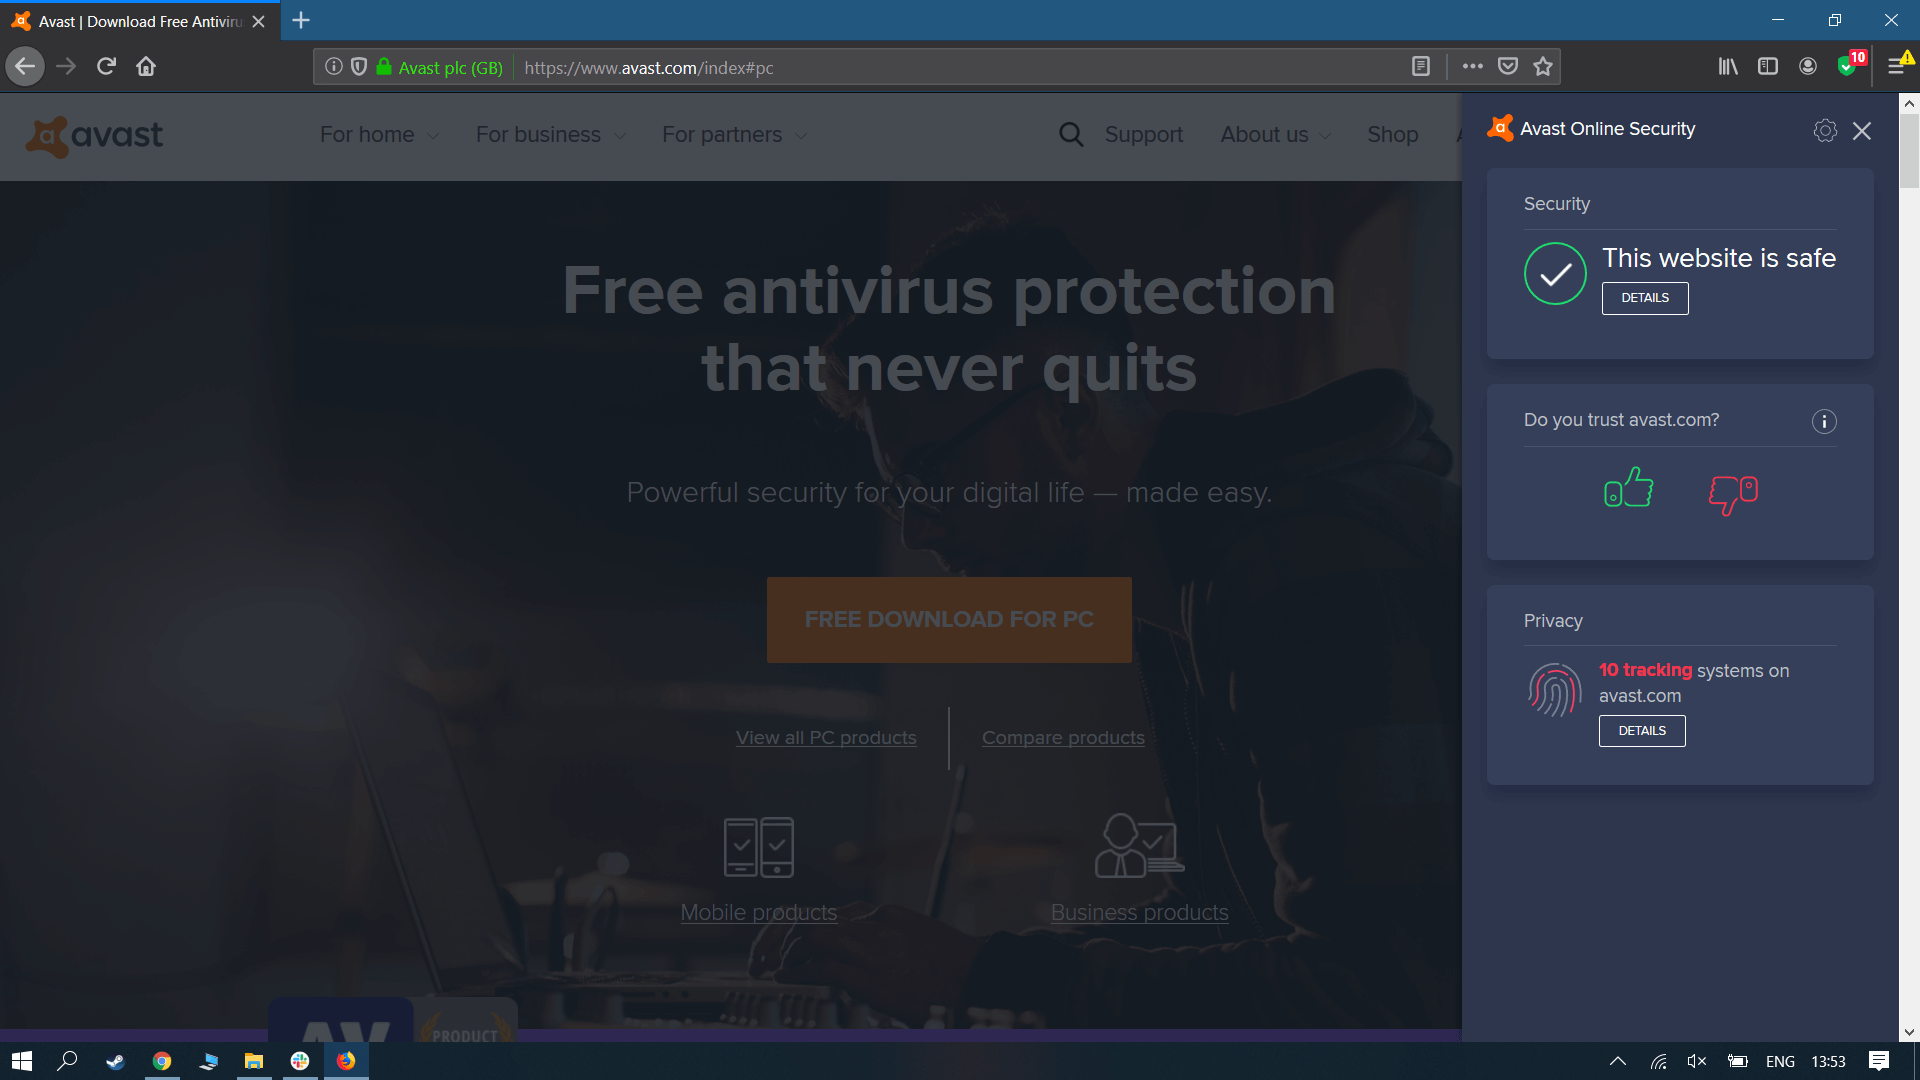 Avast's free antivirus solution tracks users online to mine data for companies like Microsoft, Pepsi, and Google